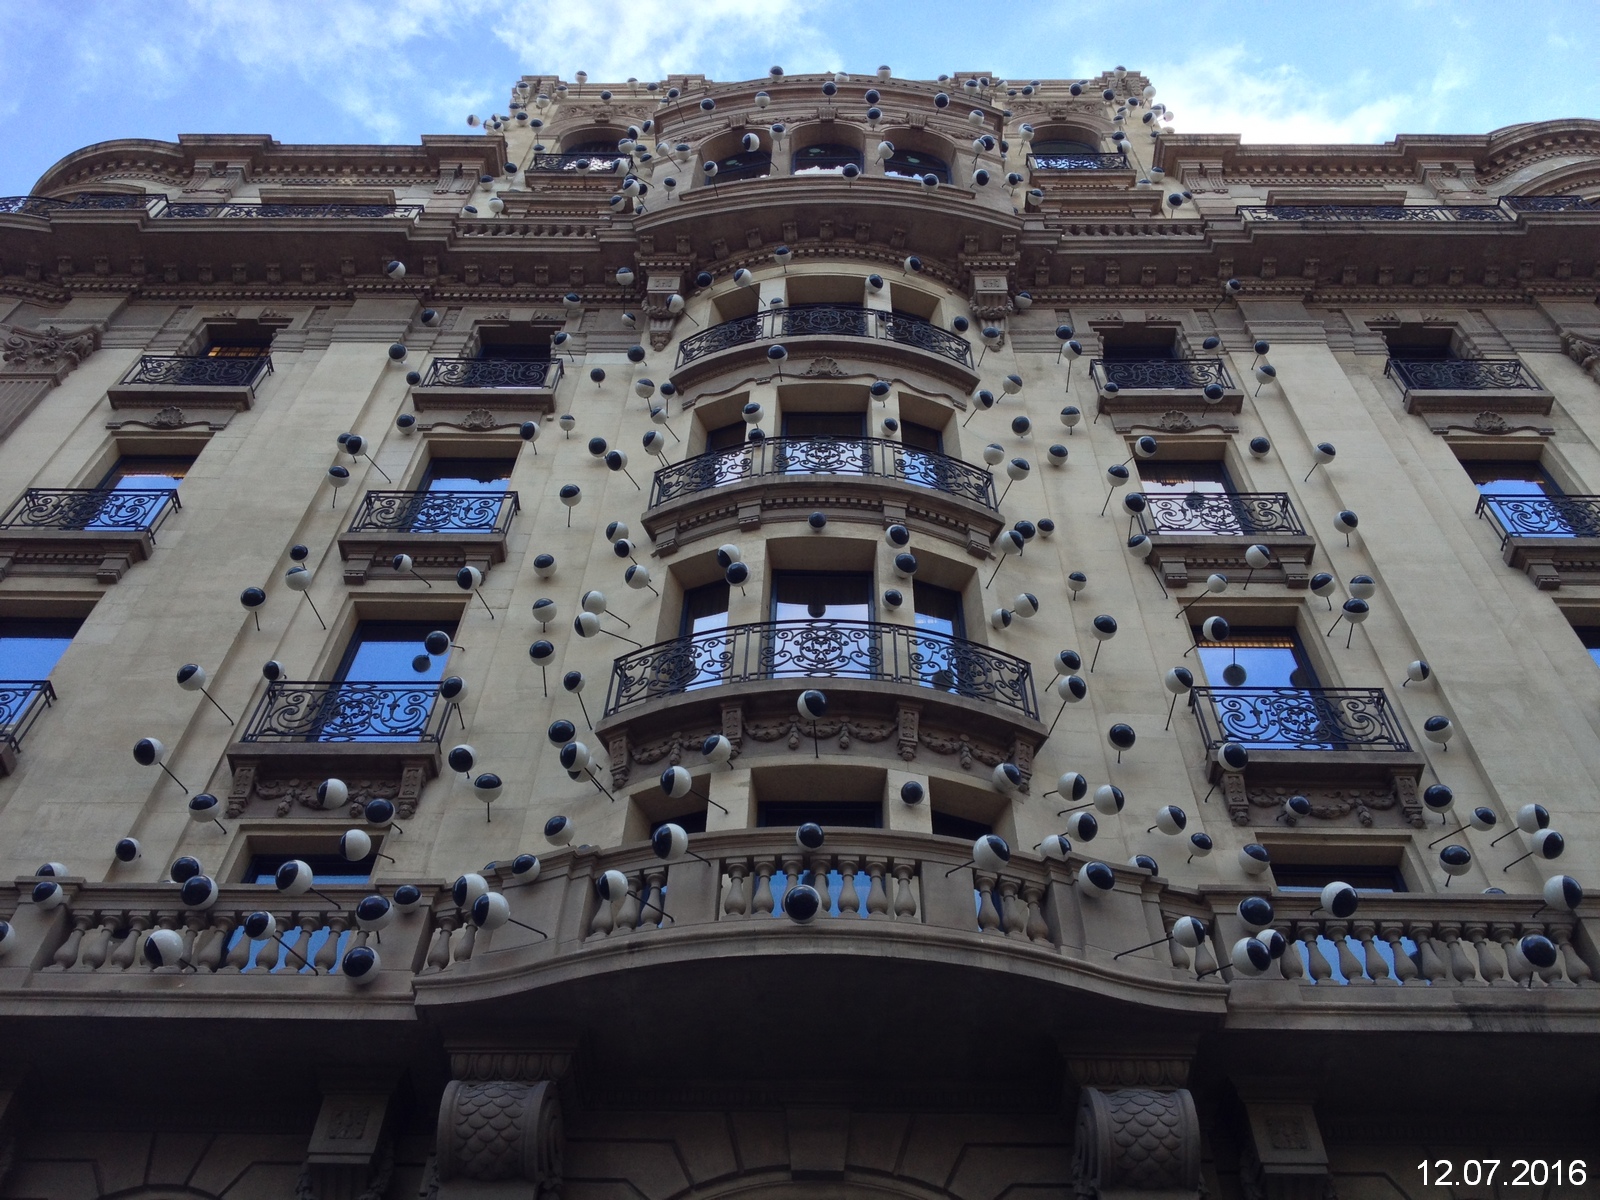 Ohla Hotel - Barcelona